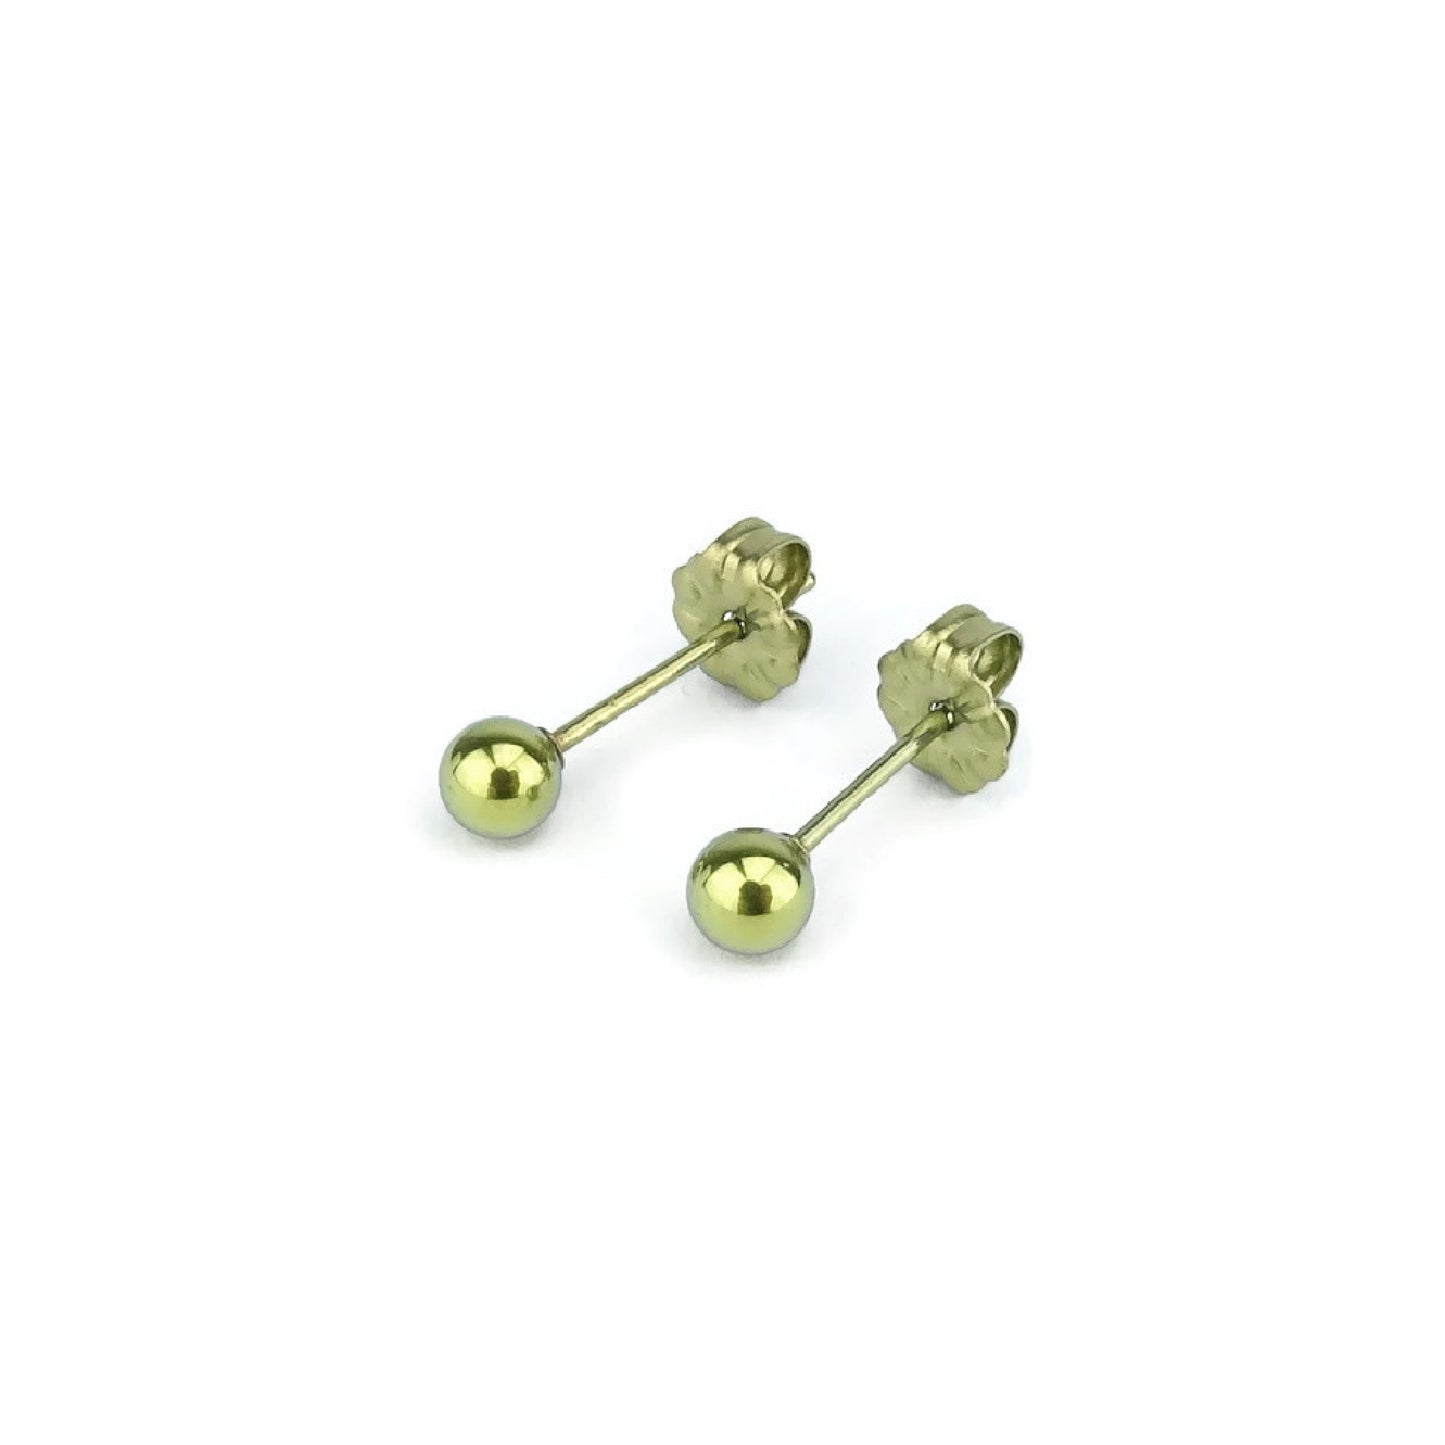 4mm Gold Ball Earrings Titanium